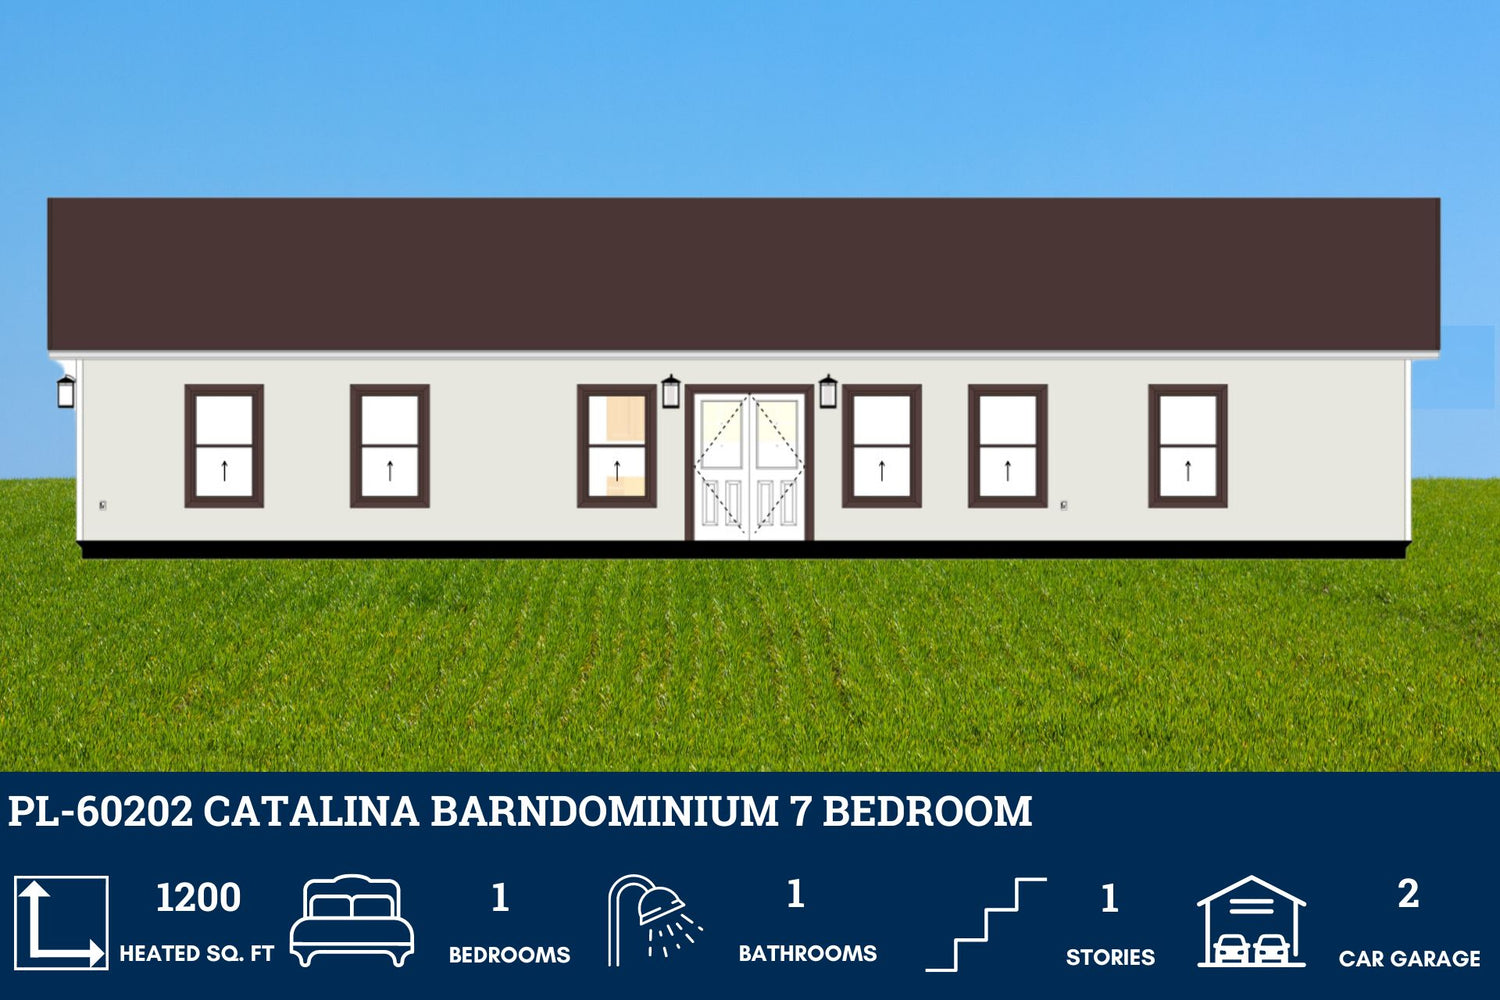 1 Bedroom Barndominium House Plans